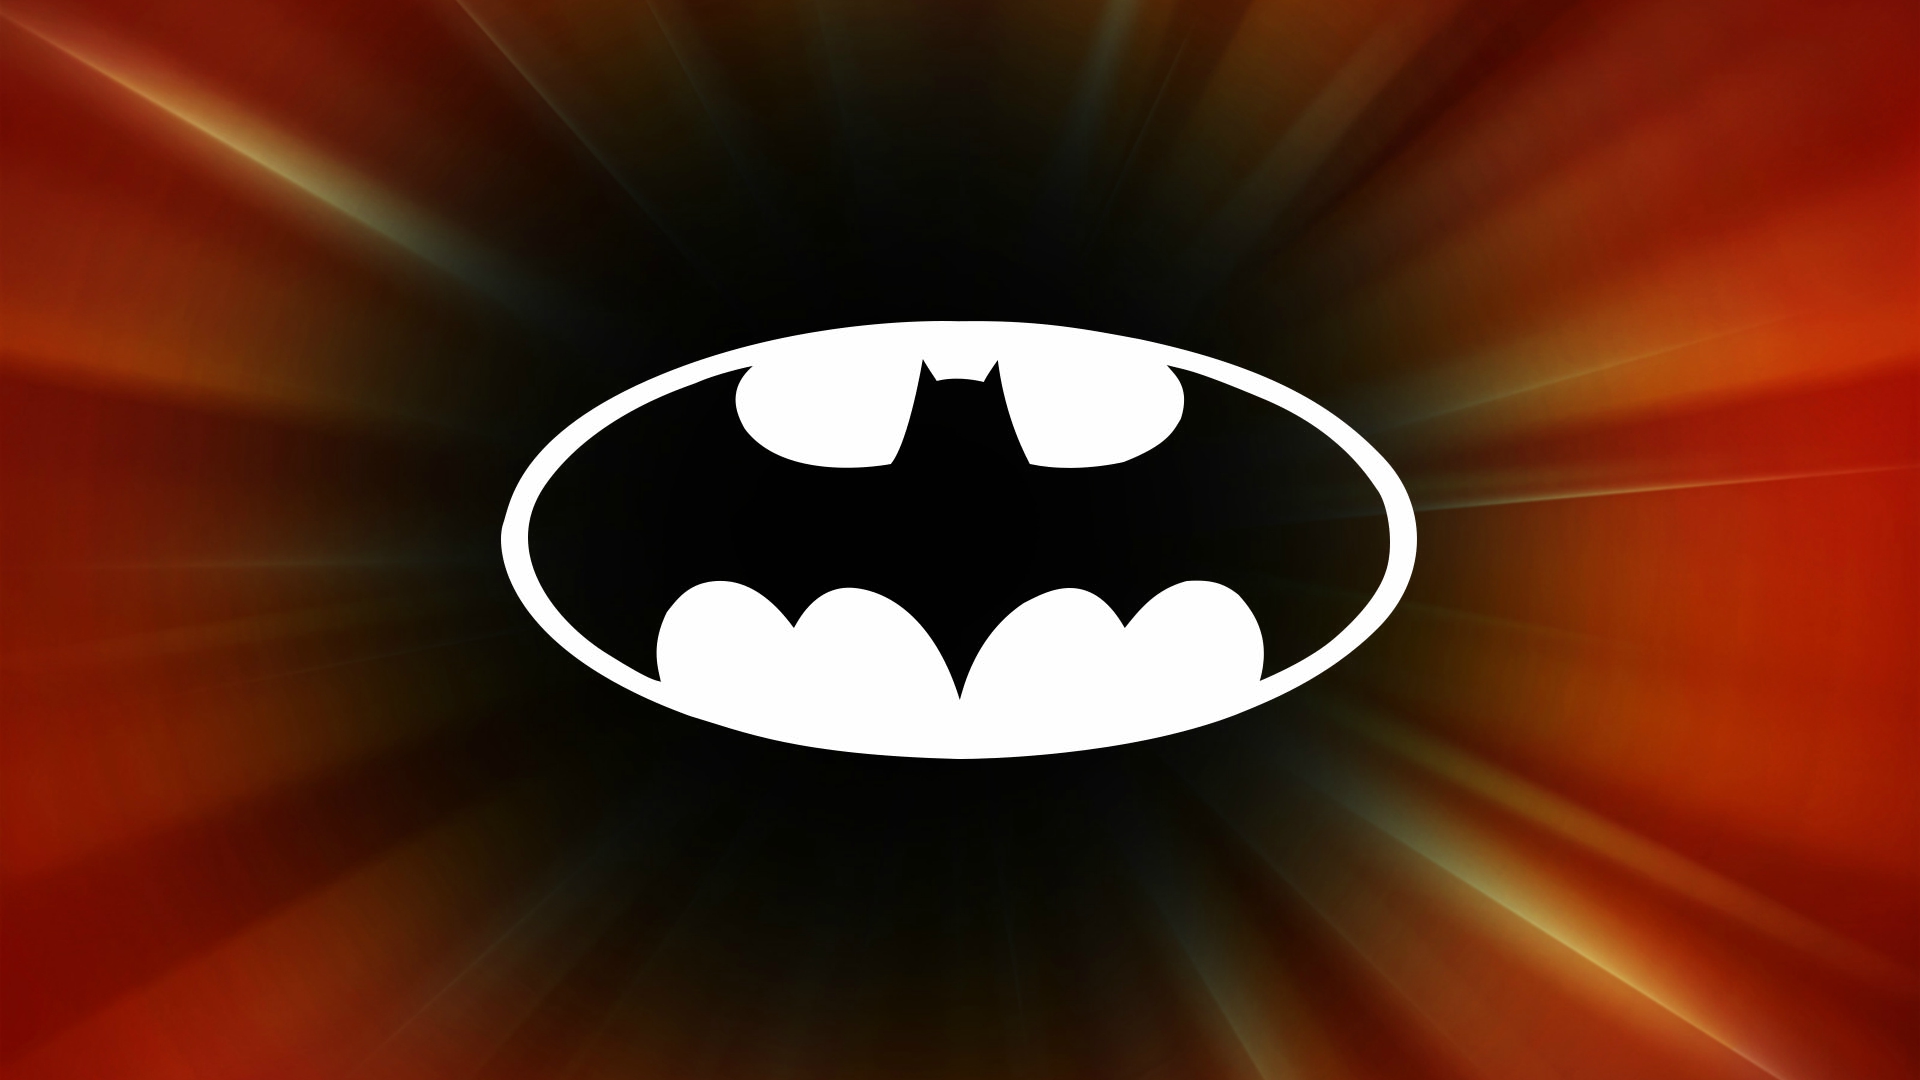 Descarga gratuita de fondo de pantalla para móvil de Historietas, The Batman, Logotipo De Batman, Símbolo De Batman.